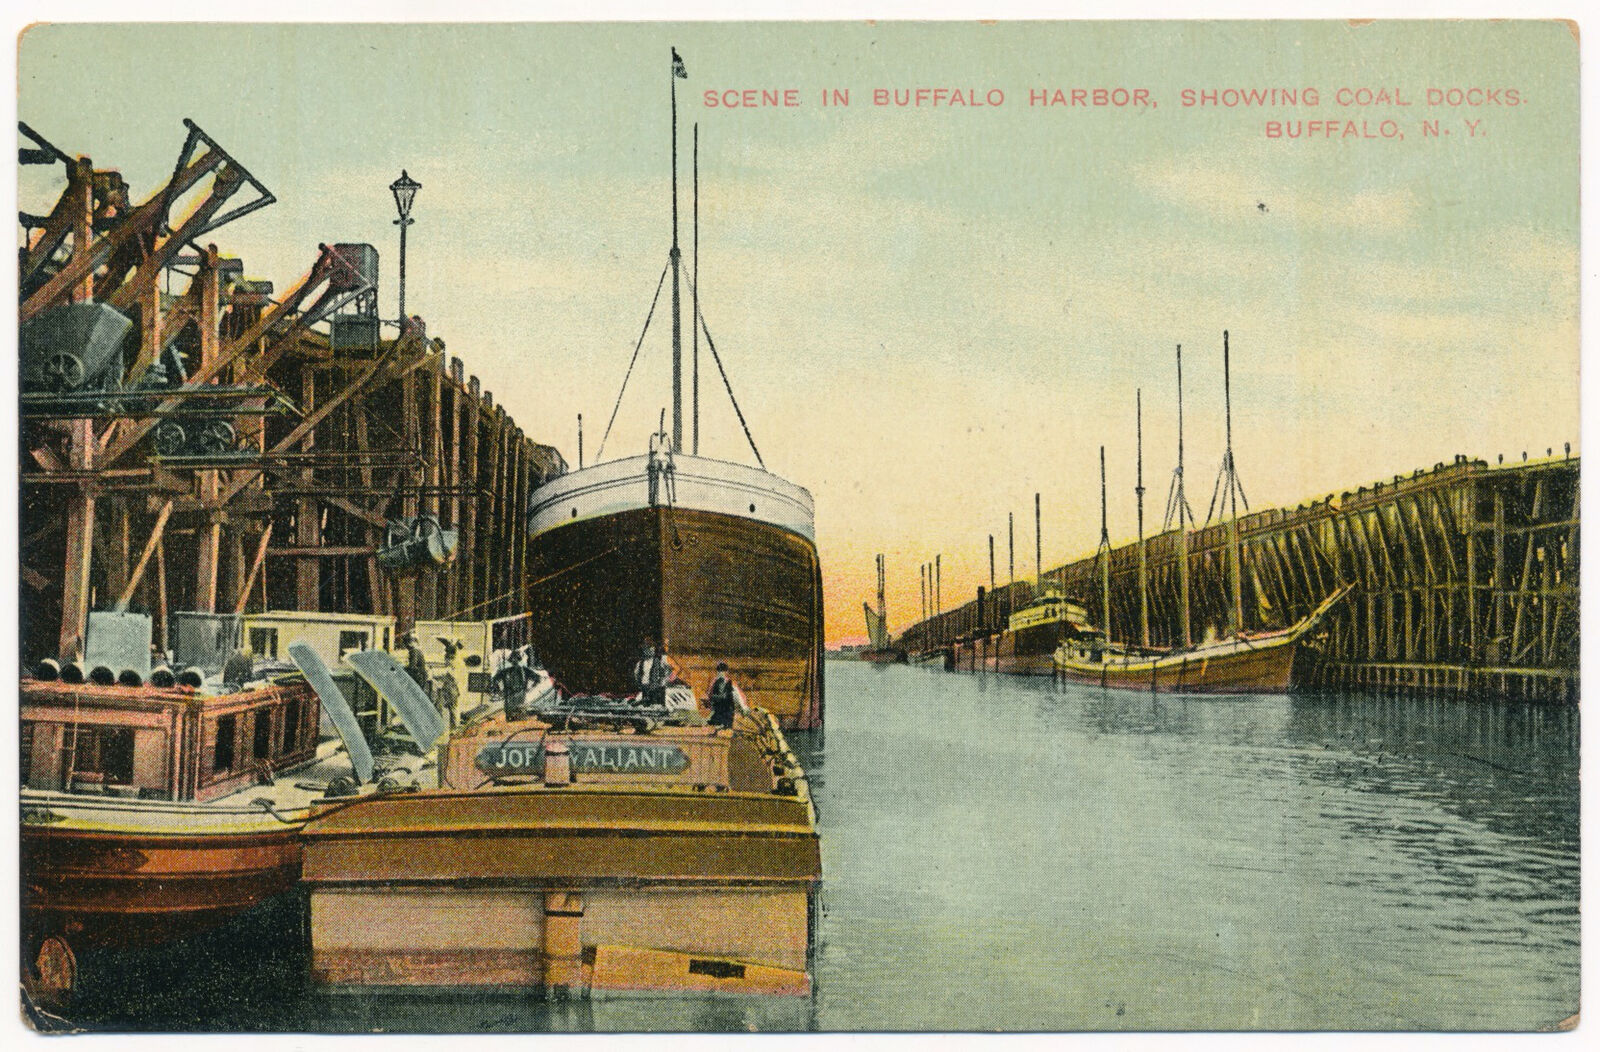 Scene in Buffalo Harbor showing Coal Docks, Buffalo, New York 1909